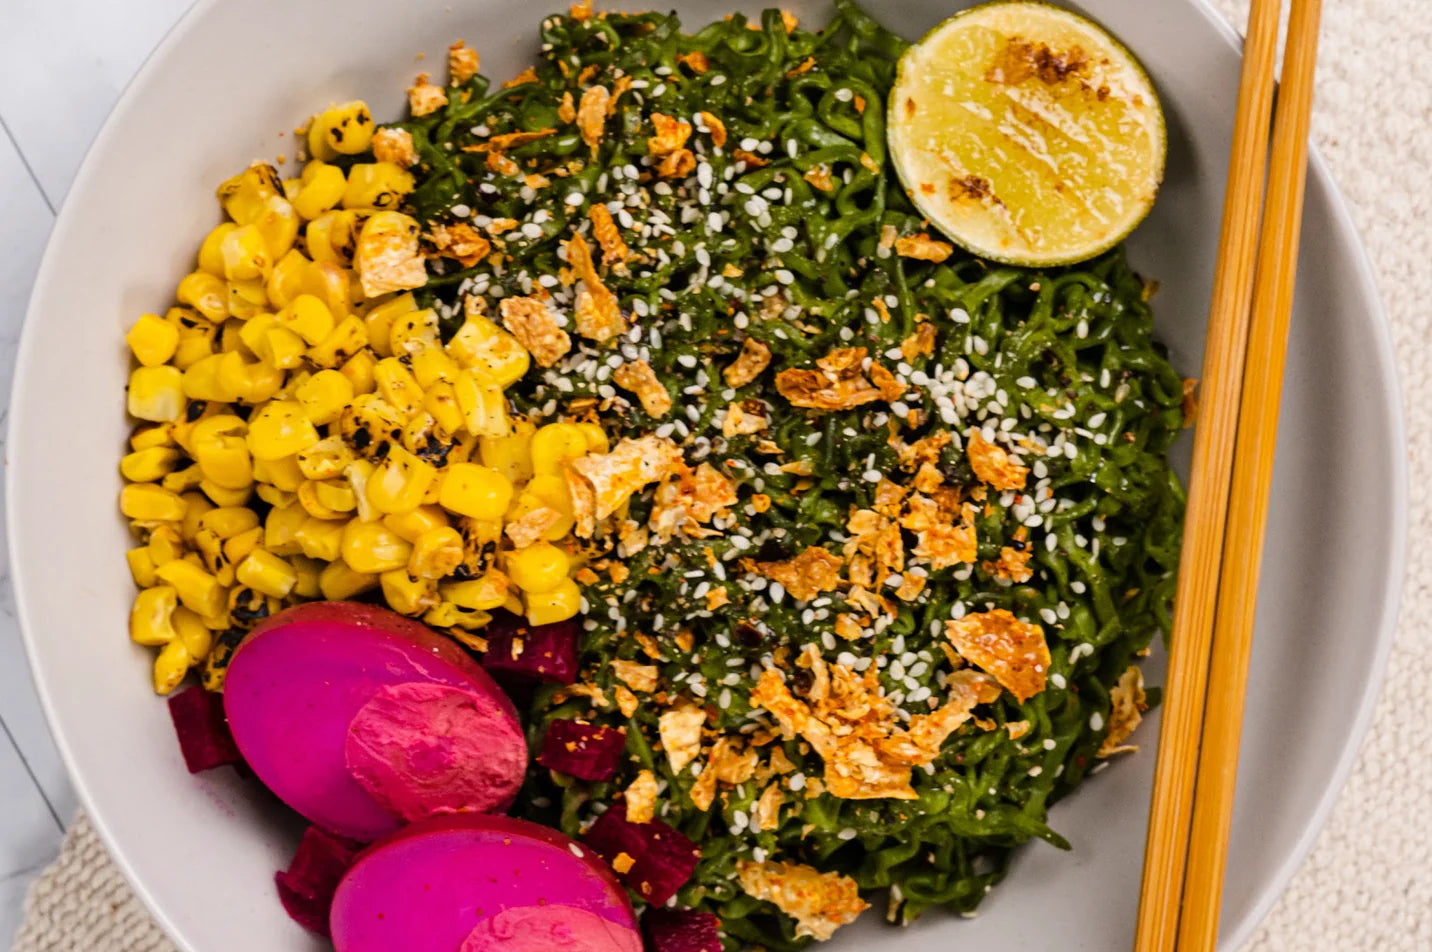 Moringa Noodles - A Green Bowl of Goodness!